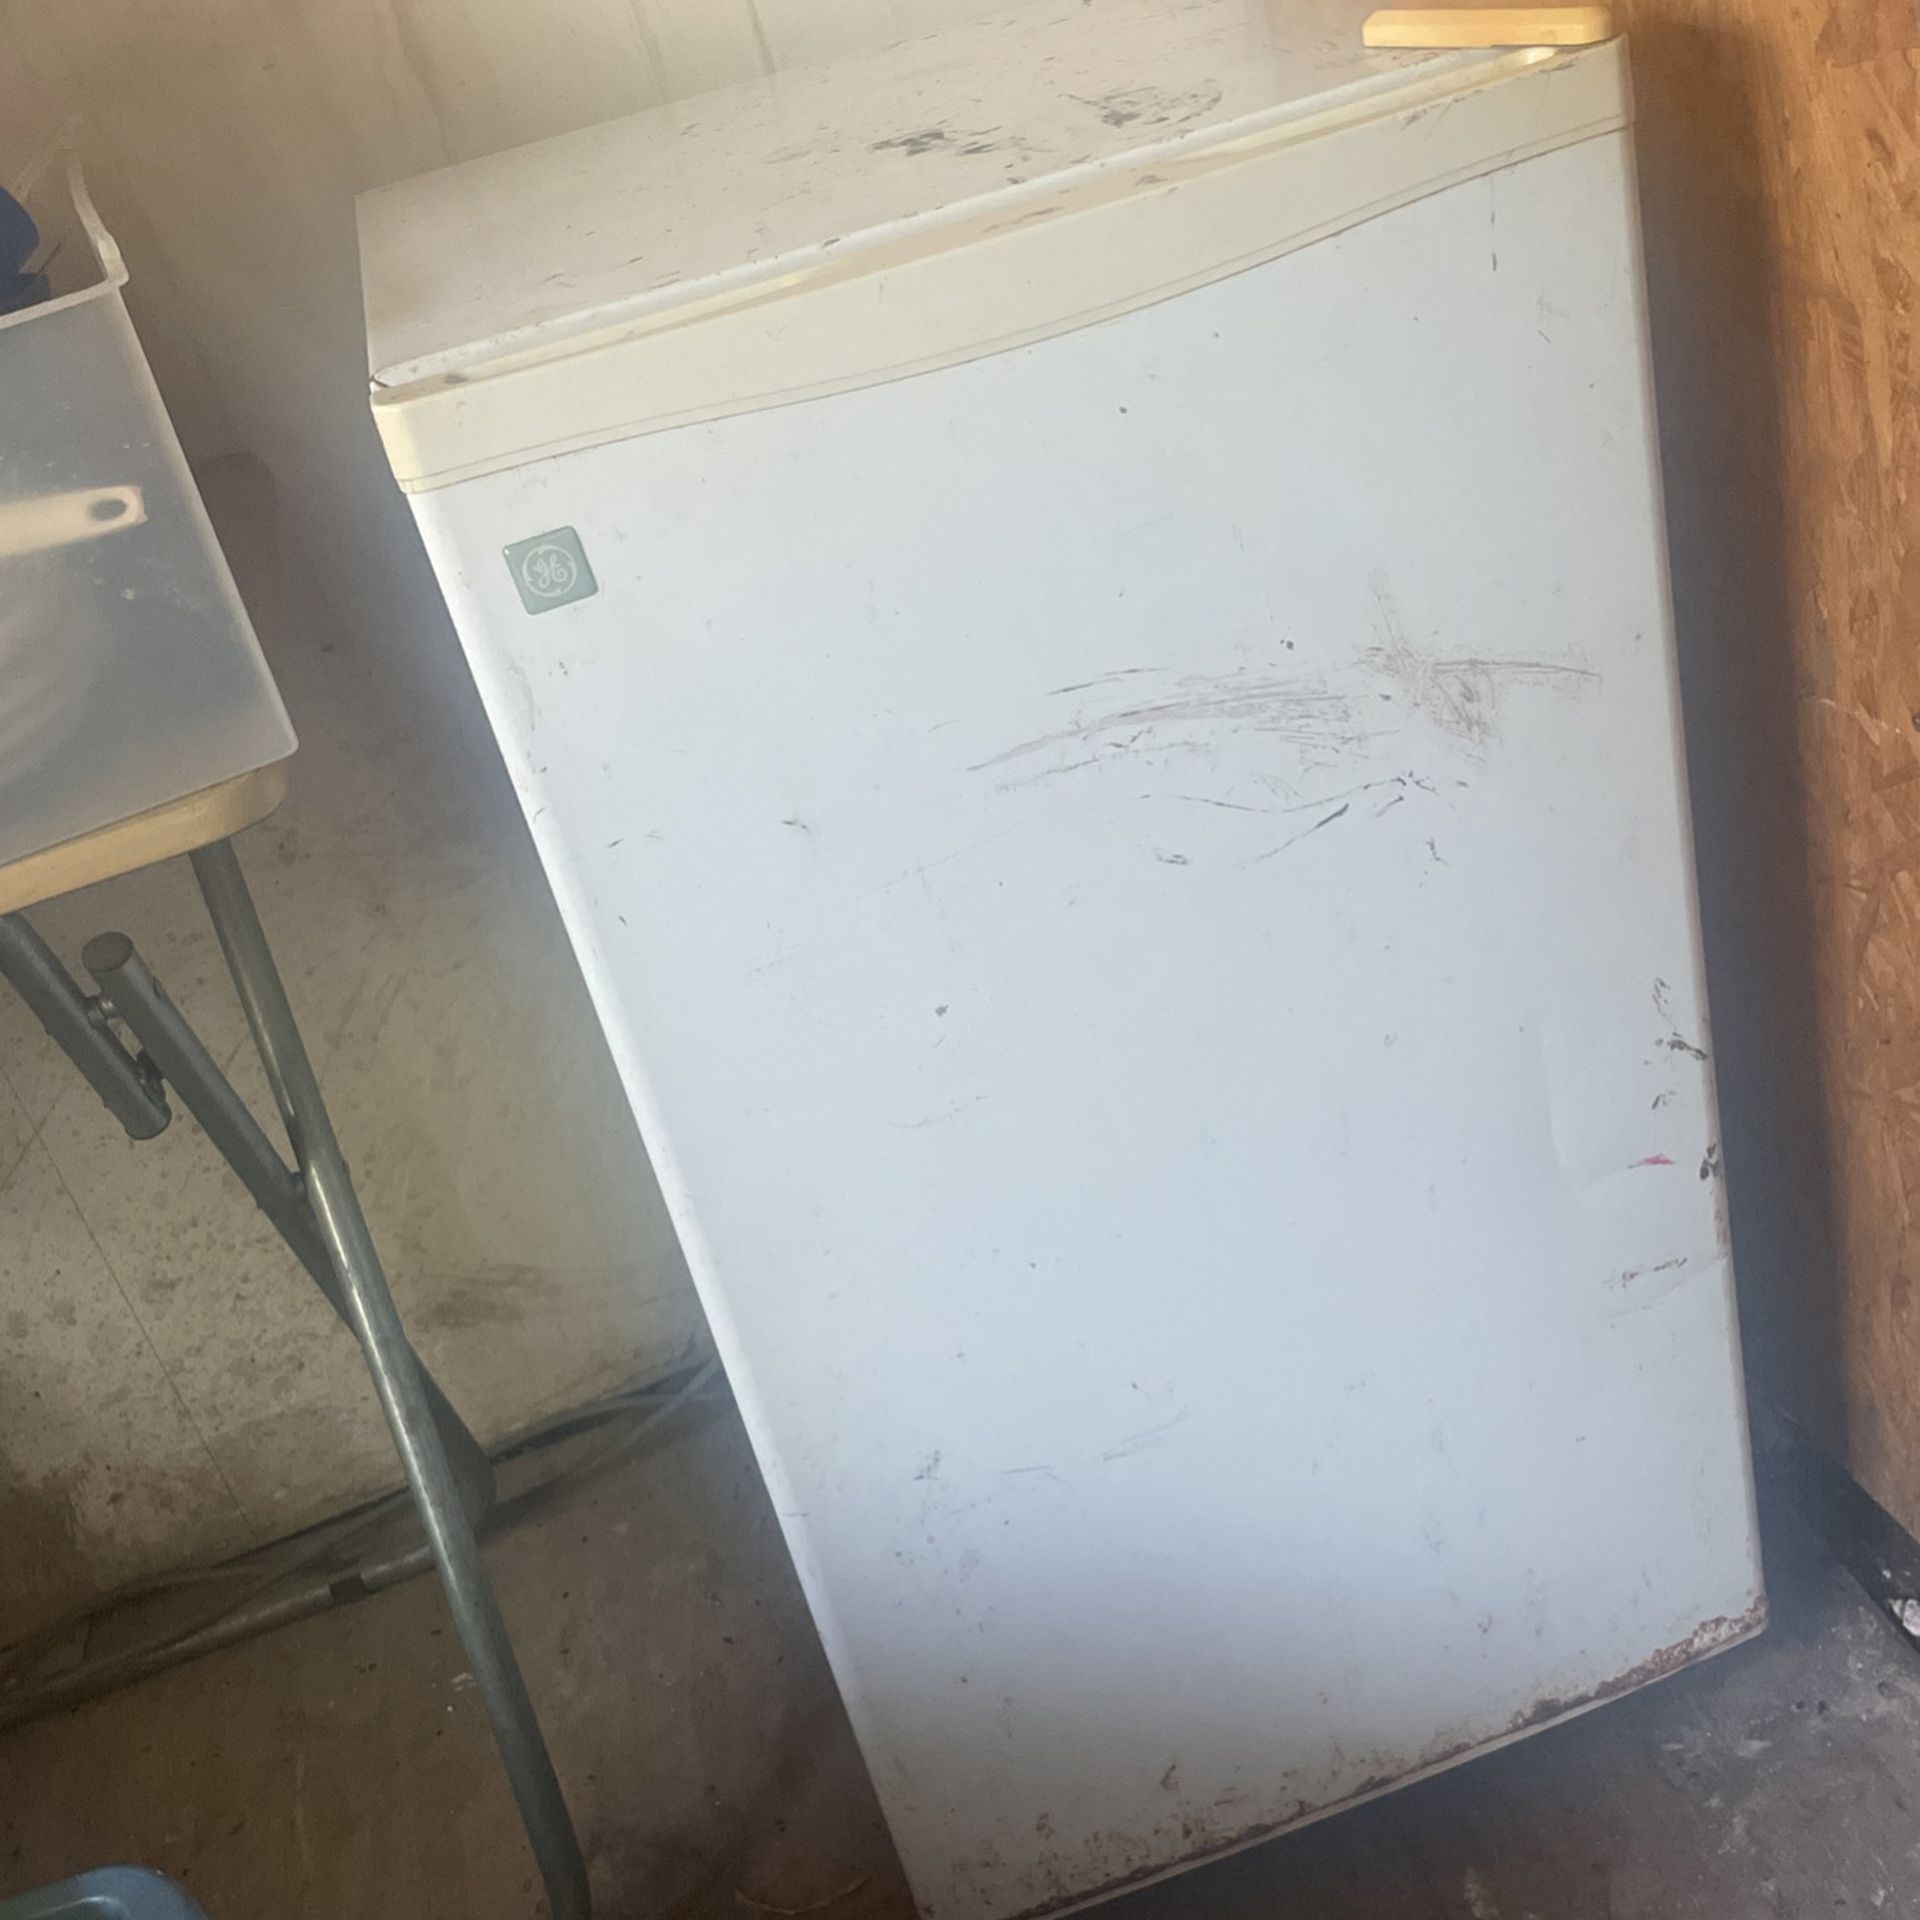  Refrigerator / Mini Fridge